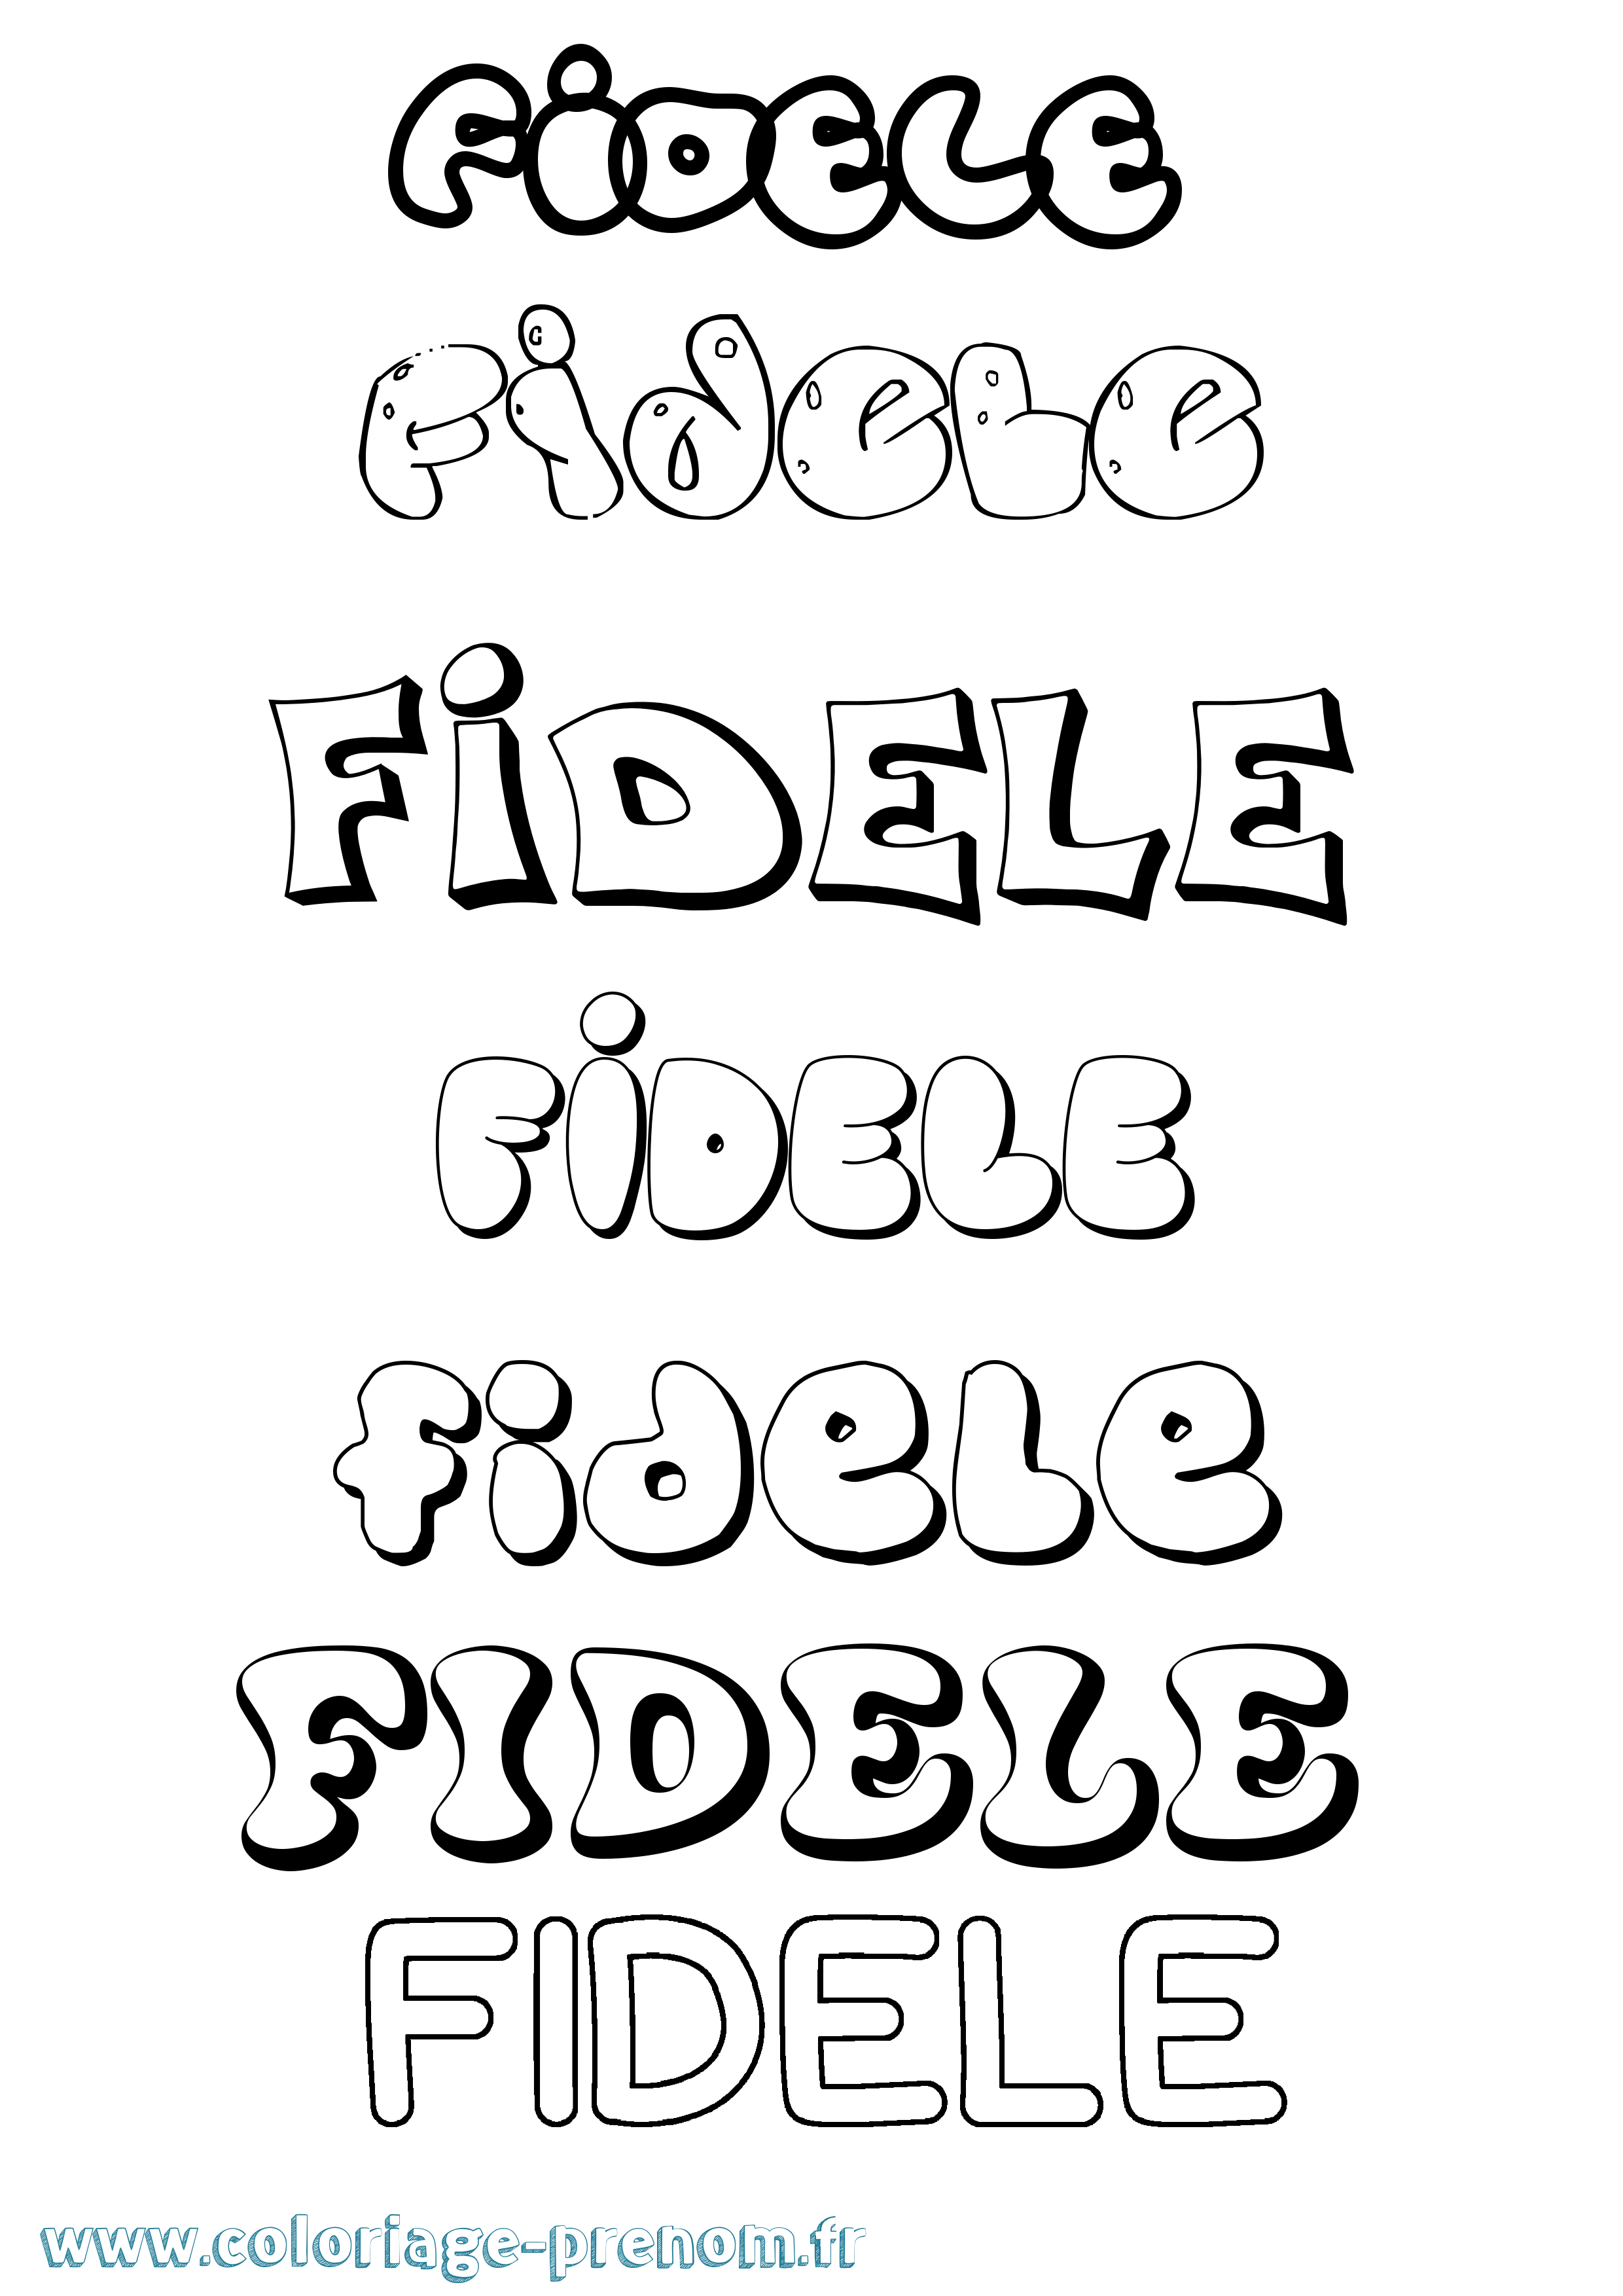 Coloriage prénom Fidele Bubble